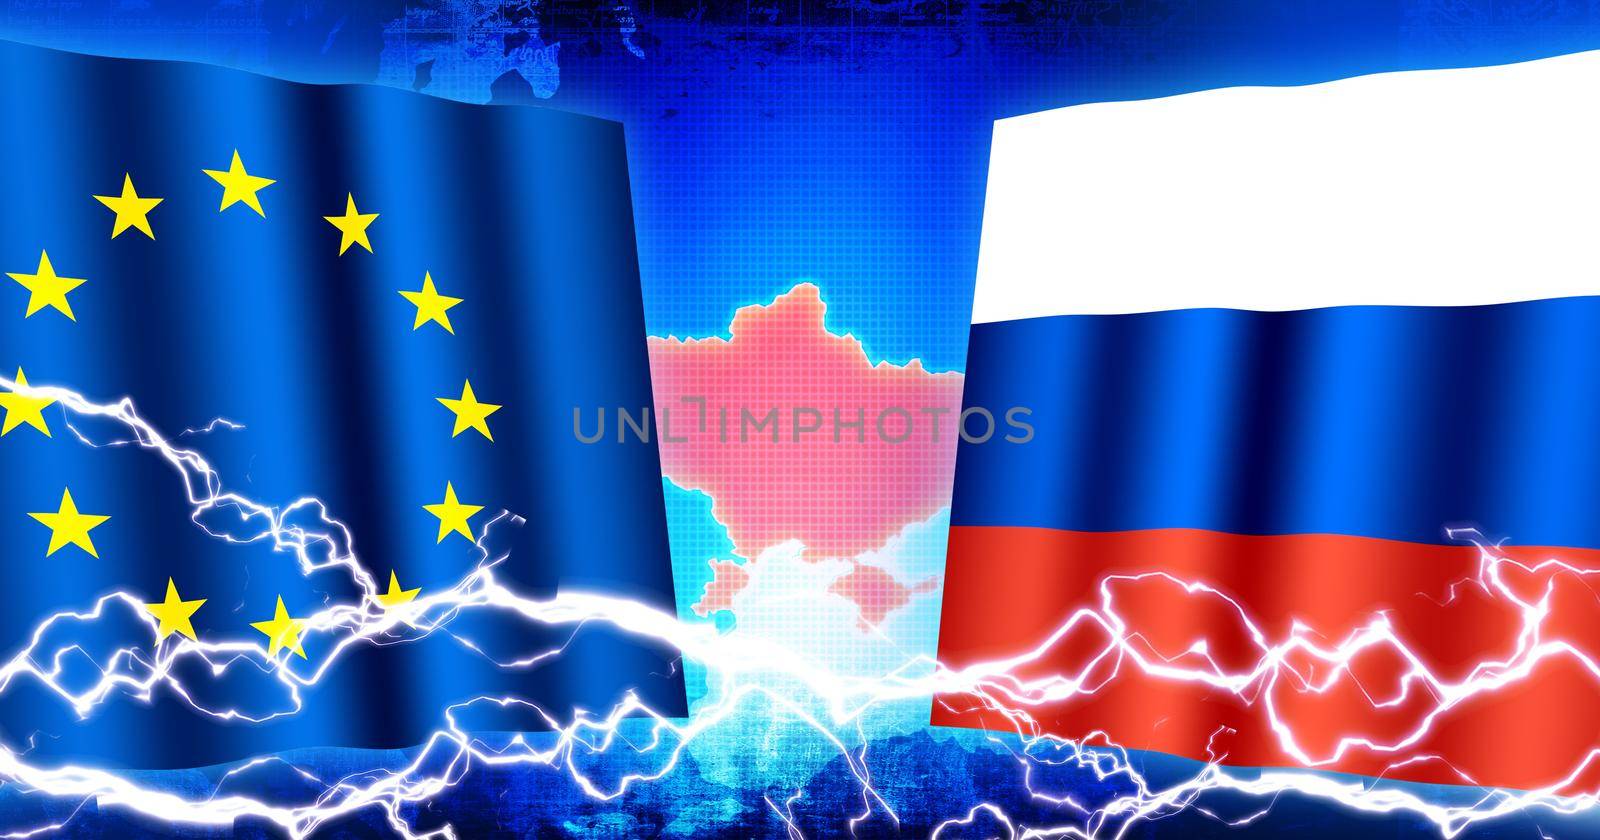 Russia vs EU (Russo-Ukrainian War ). Web banner illustration by barks